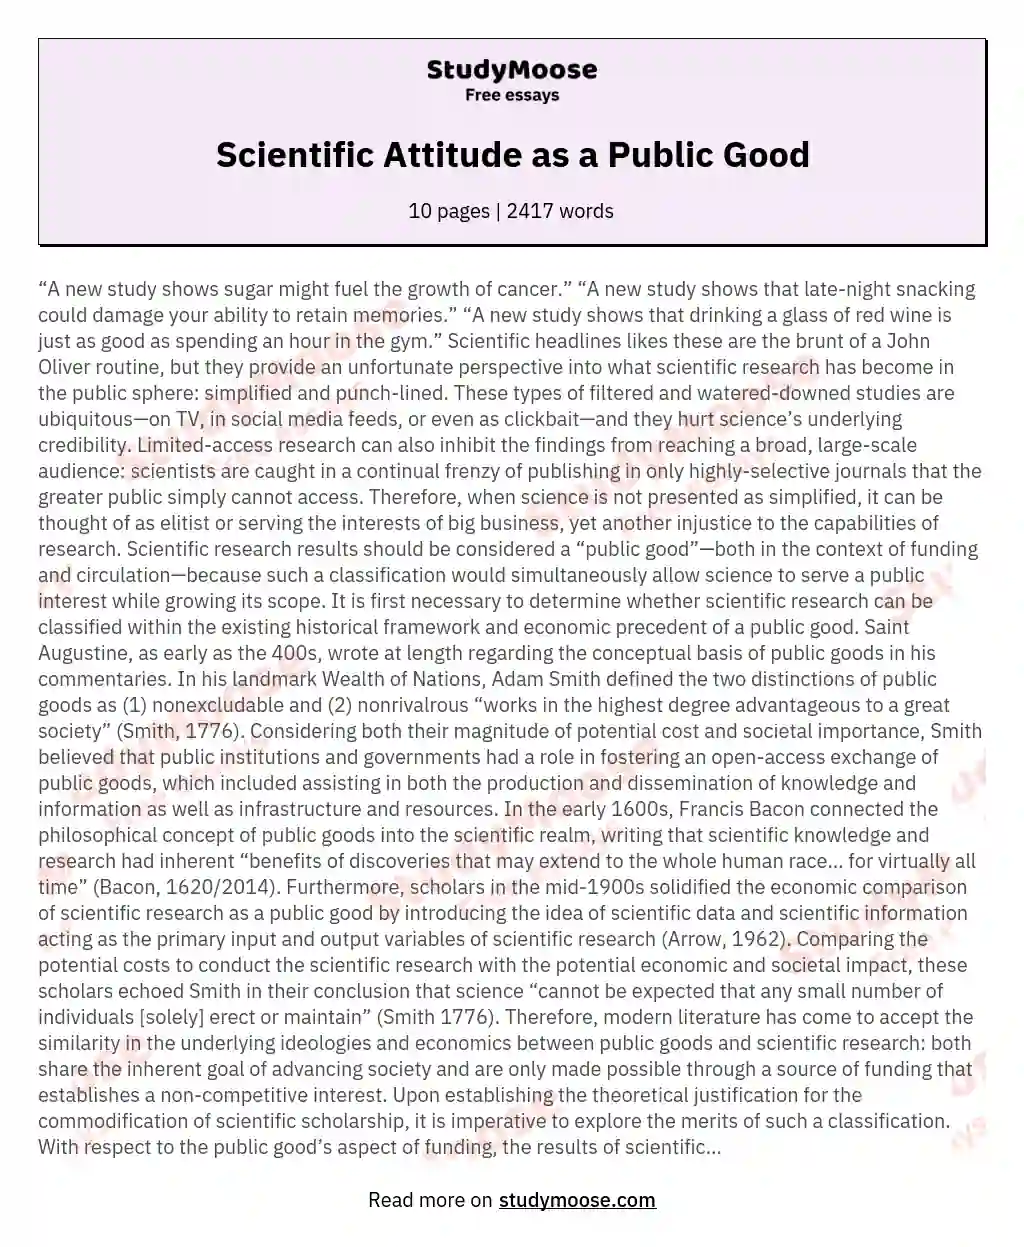 Scientific Attitude as a Public Good essay